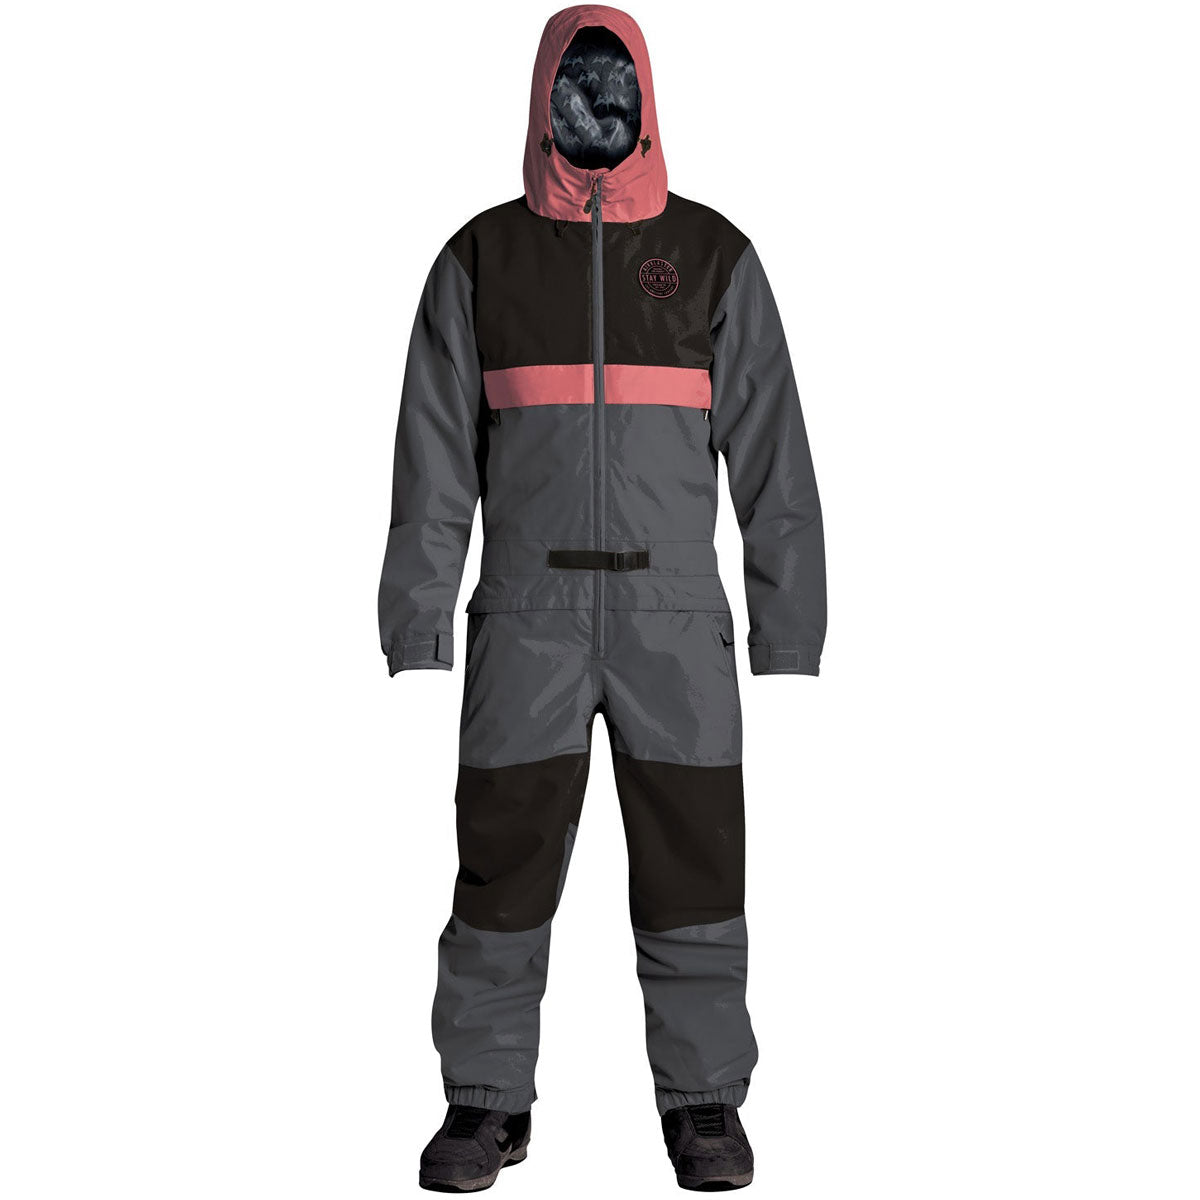 Airblaster Kook Suit Snowboard Base Layer - Black/Hot Coral image 1